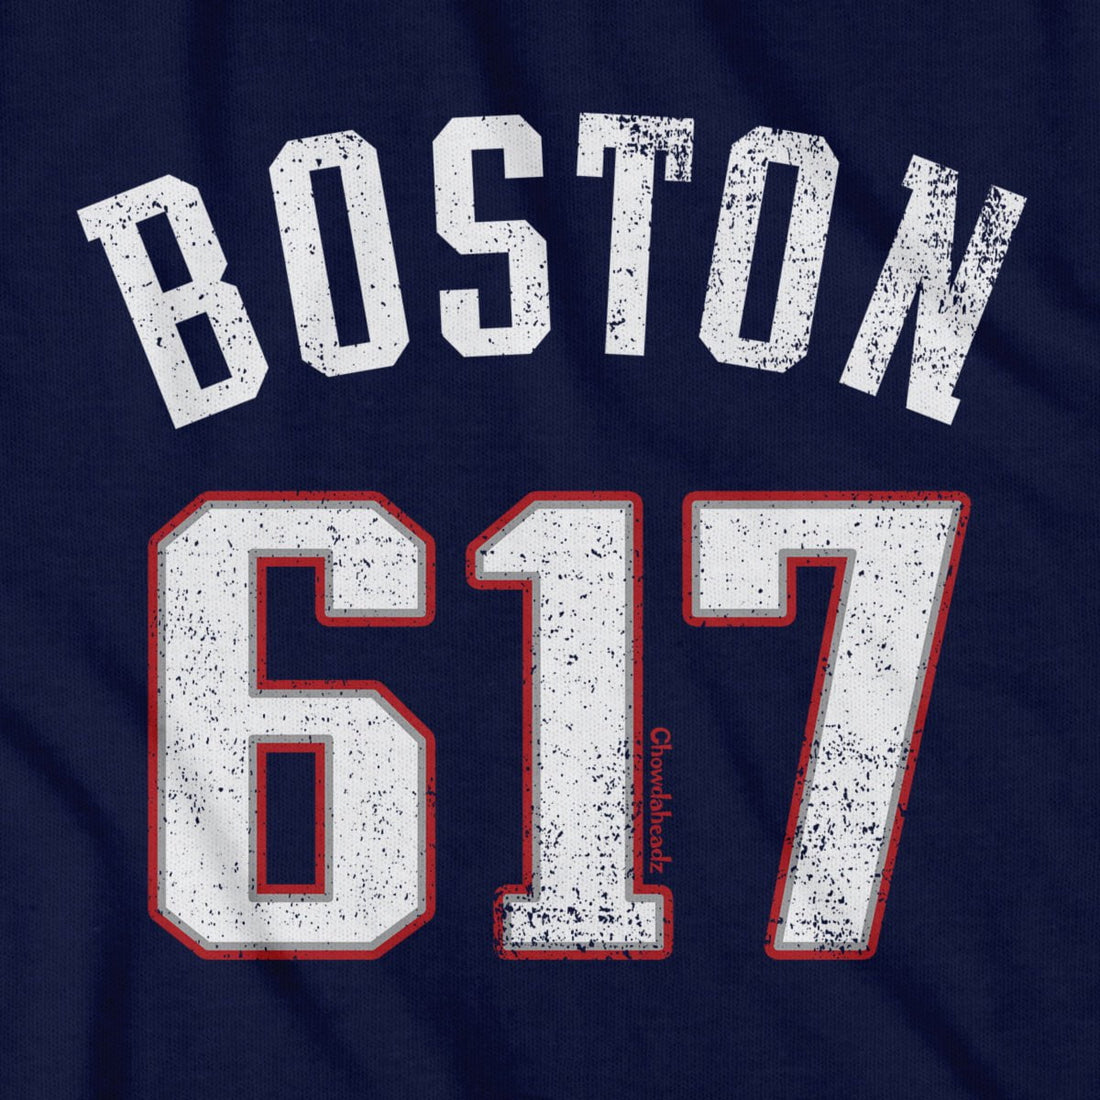 Boston 617 Football T-Shirt - Chowdaheadz